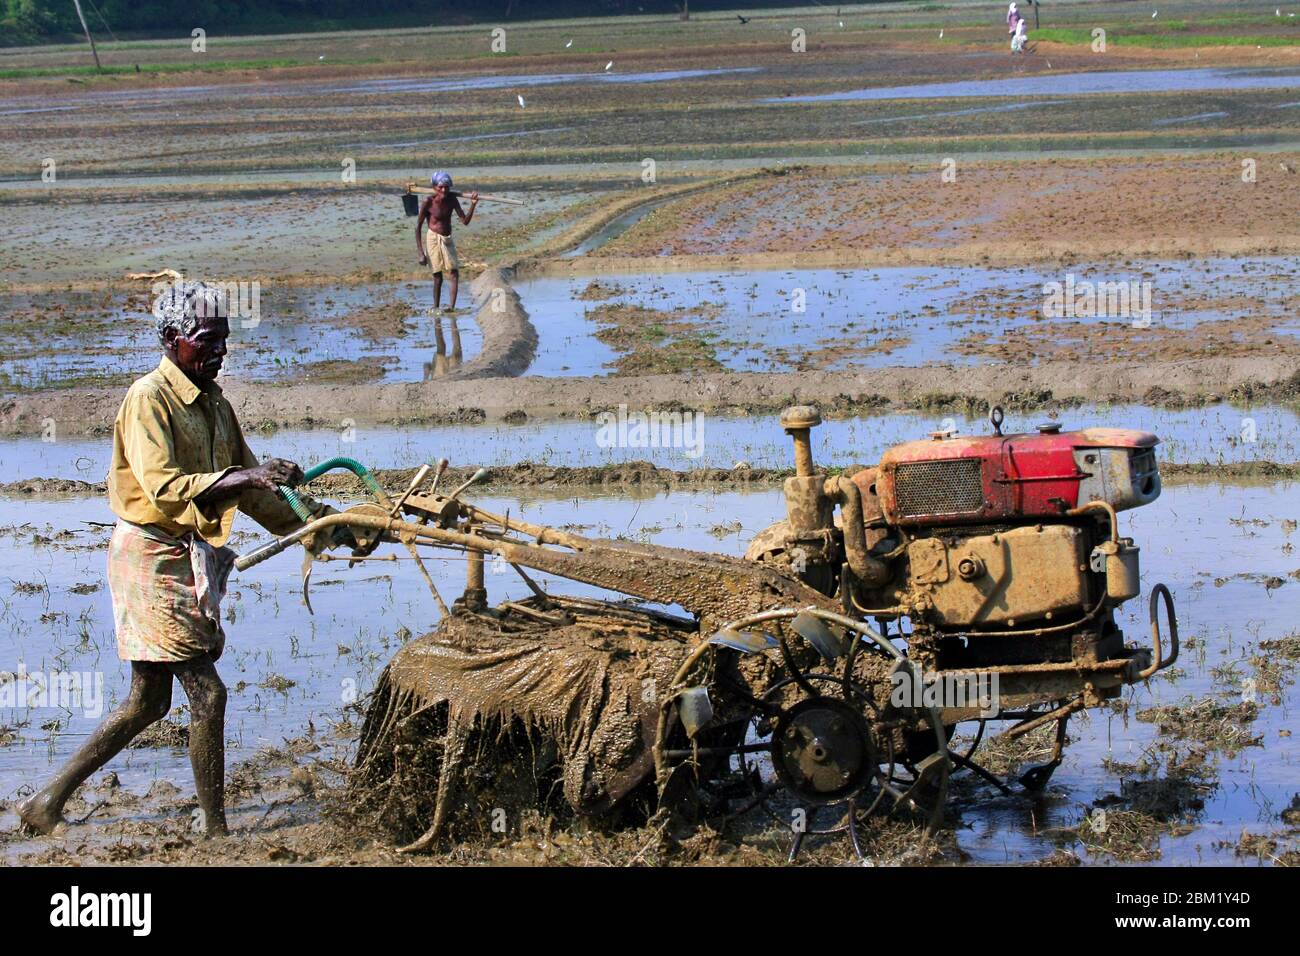 Arbeiter auf den Reisfeldern in kerala, südindien, indien, asien, Landwirtschaft in indien, kerala Reisanbau, pradeep subramanian Stockfoto